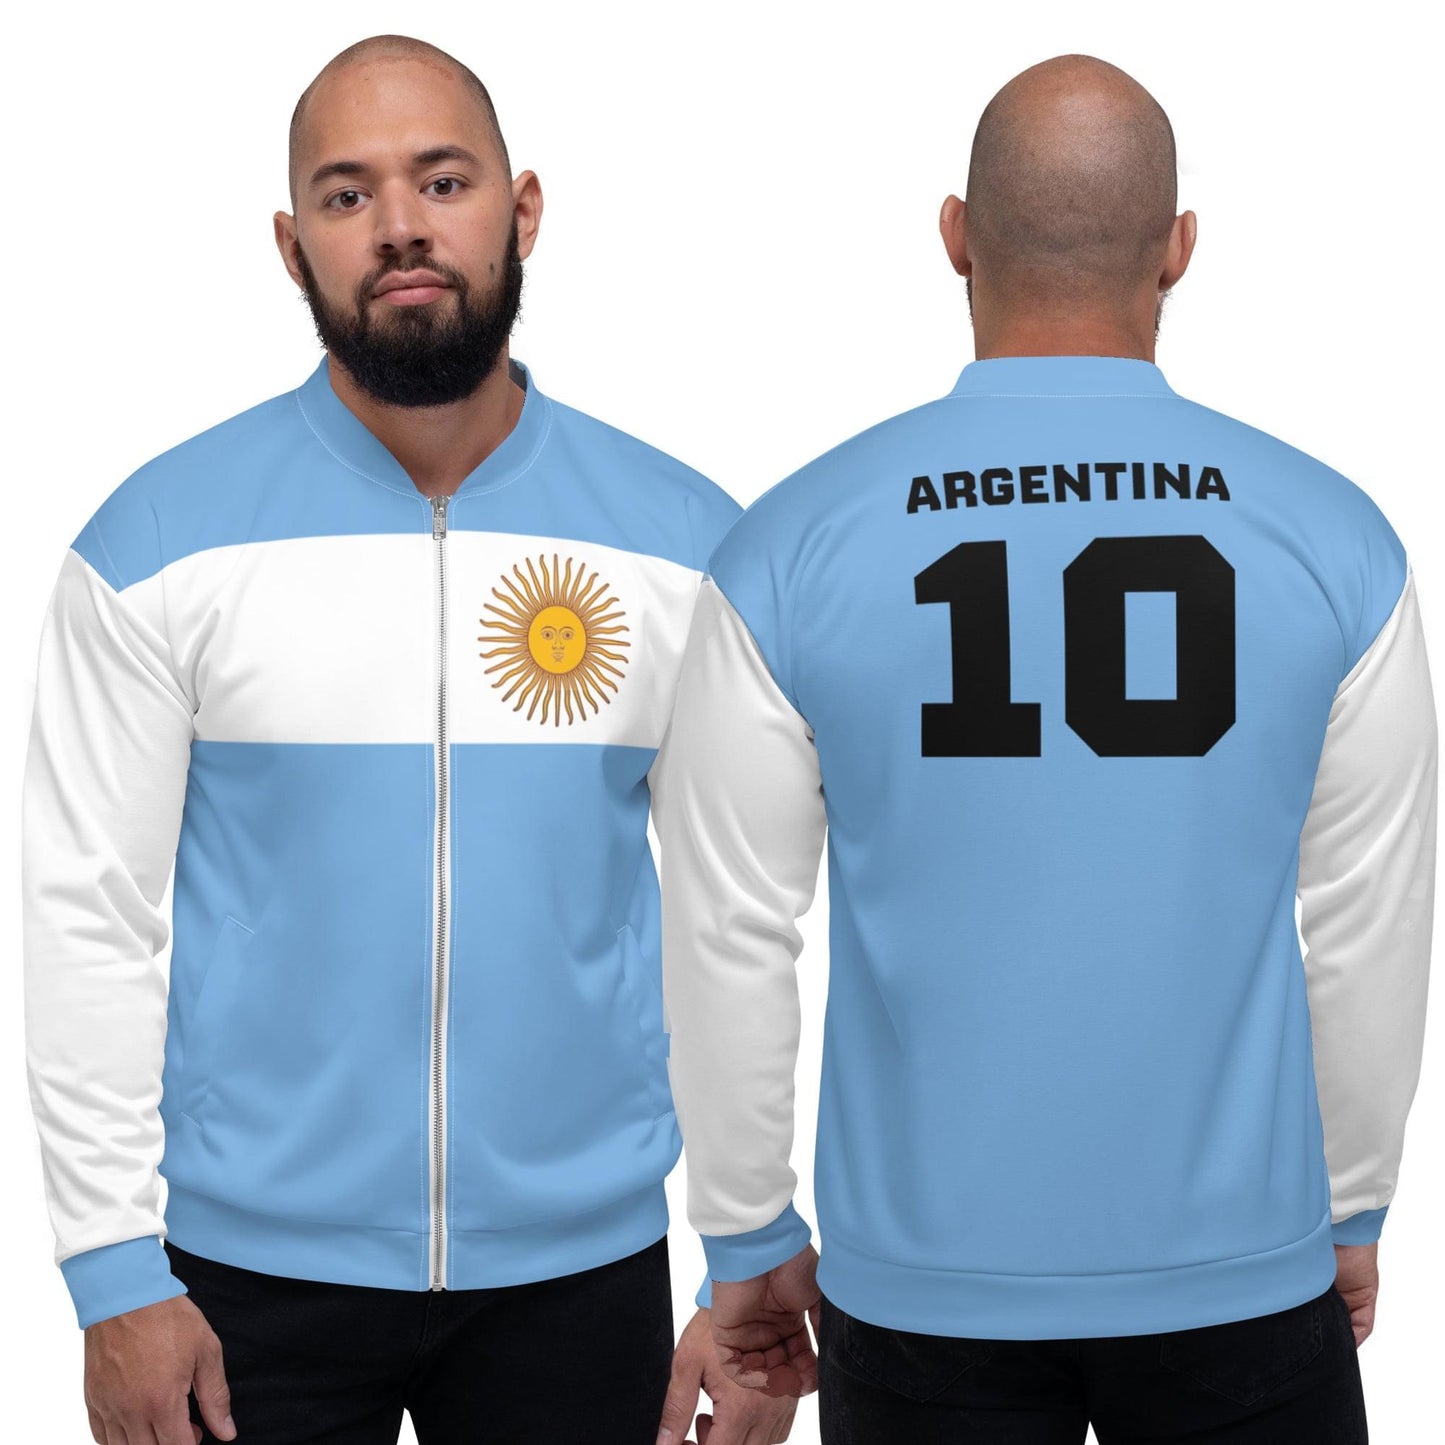 Chaqueta Argentina / Estilo de Ropa Argentina Unisex / Colores de la Bandera Argentina